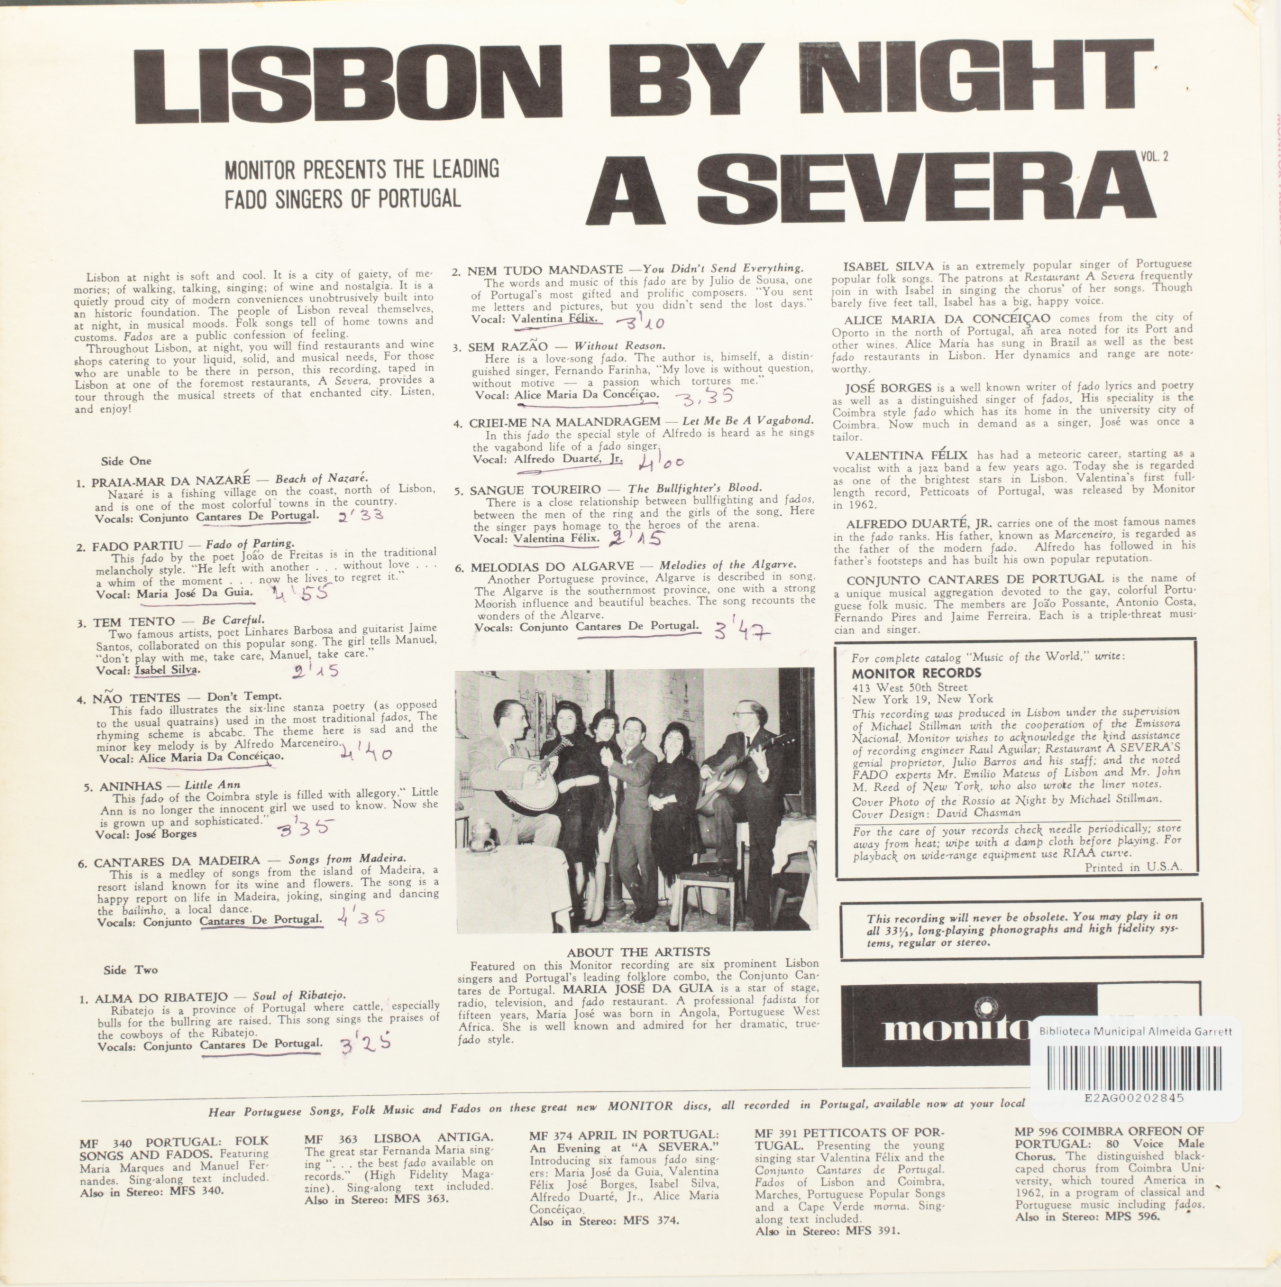 Lisbon by Night: A Severa, Vol. 2